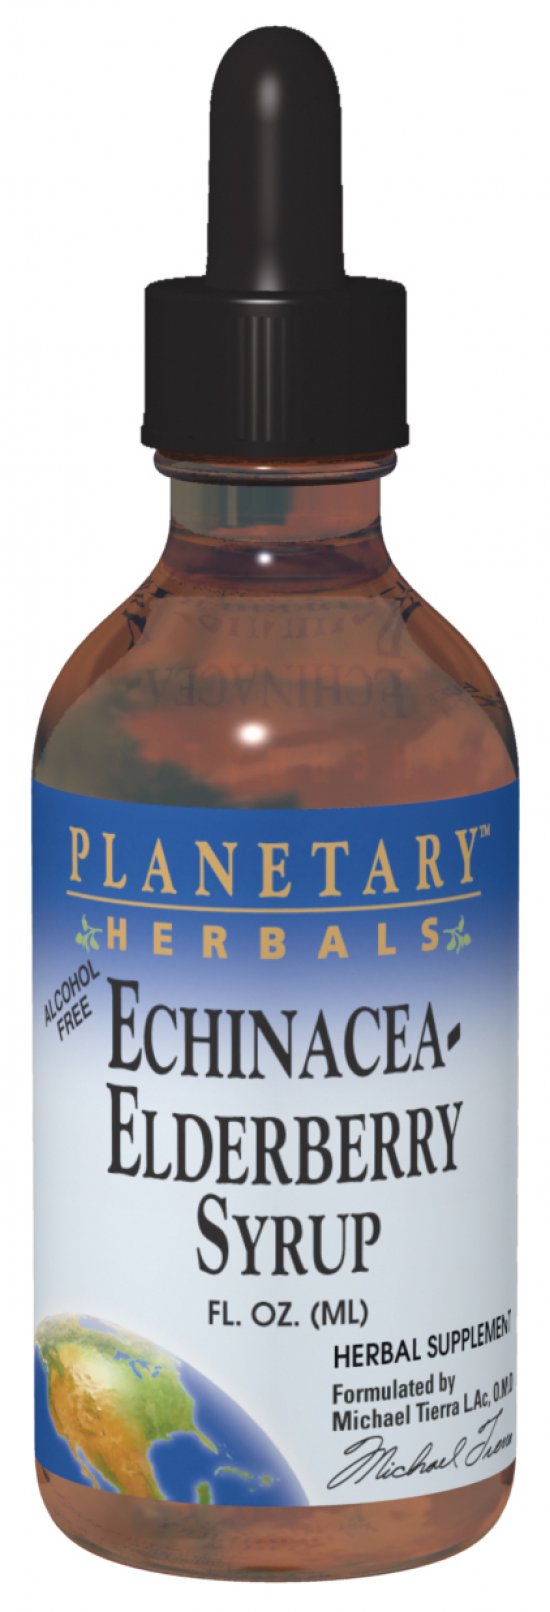 PLANETARY HERBALS: Echinacea-Elderberry Syrup 2 fl oz